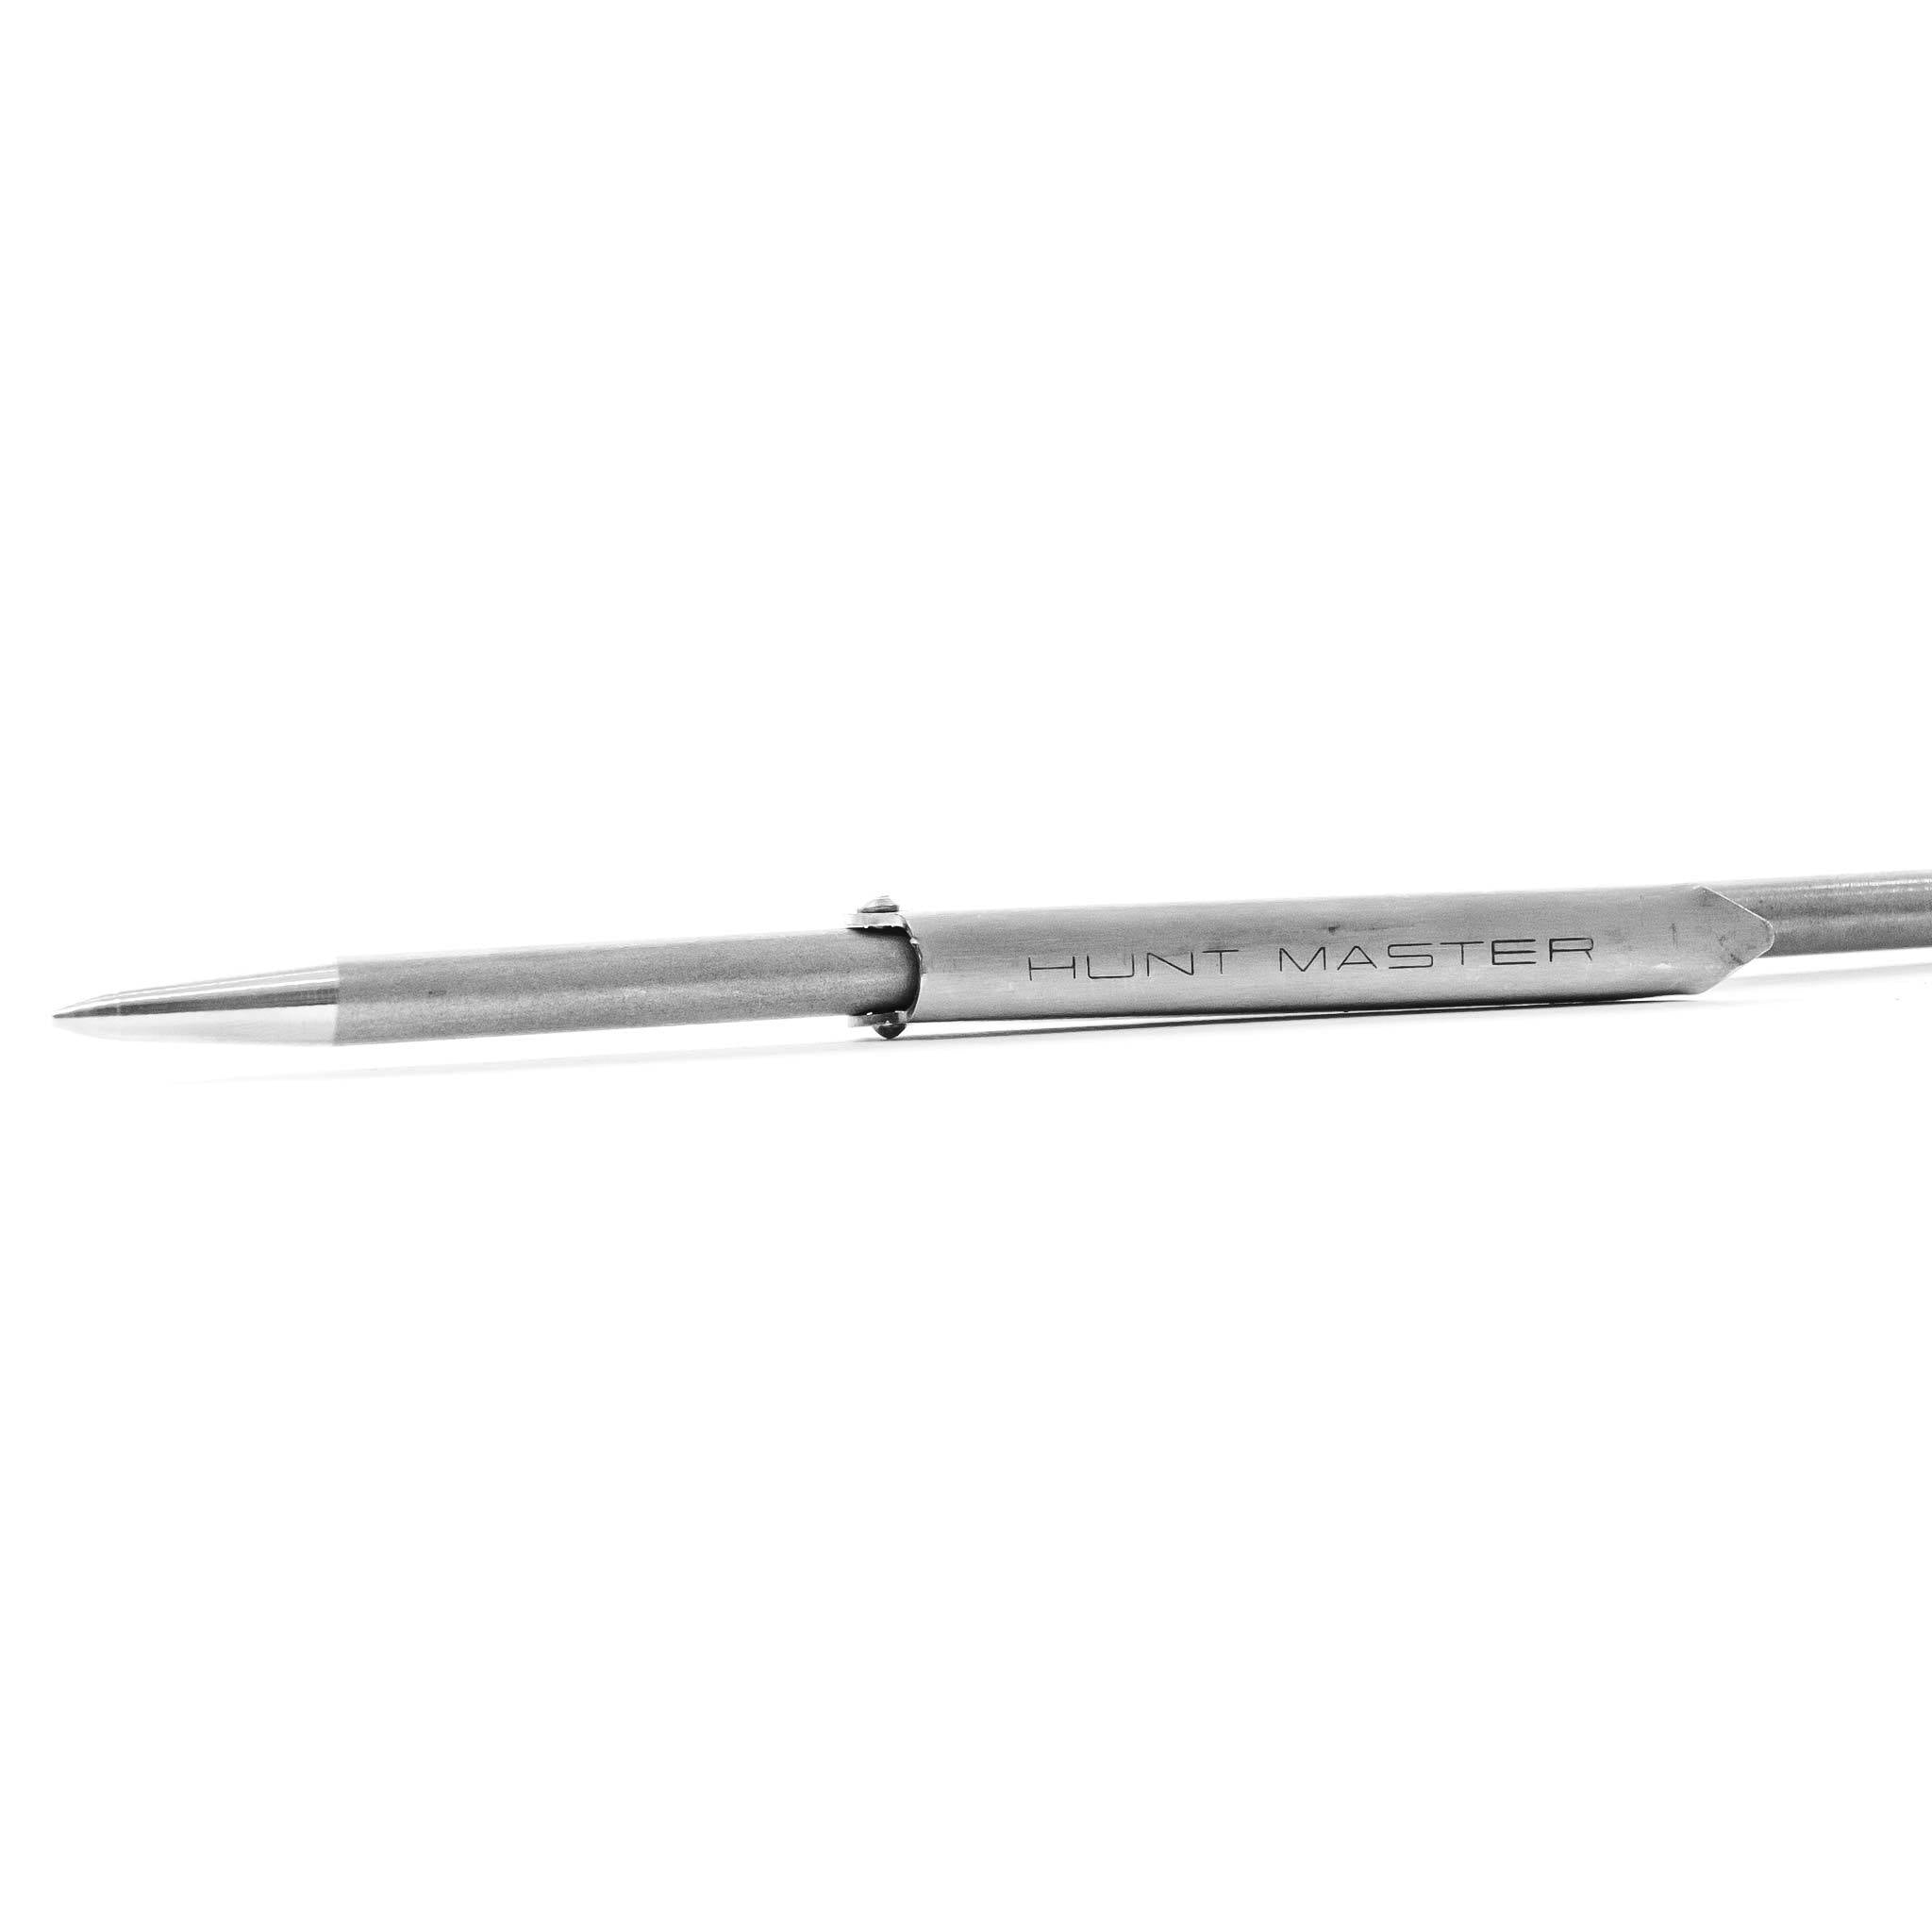 GEN 1 Speargun Shaft - Pencil Cut - Single Flopper - 6.5mm